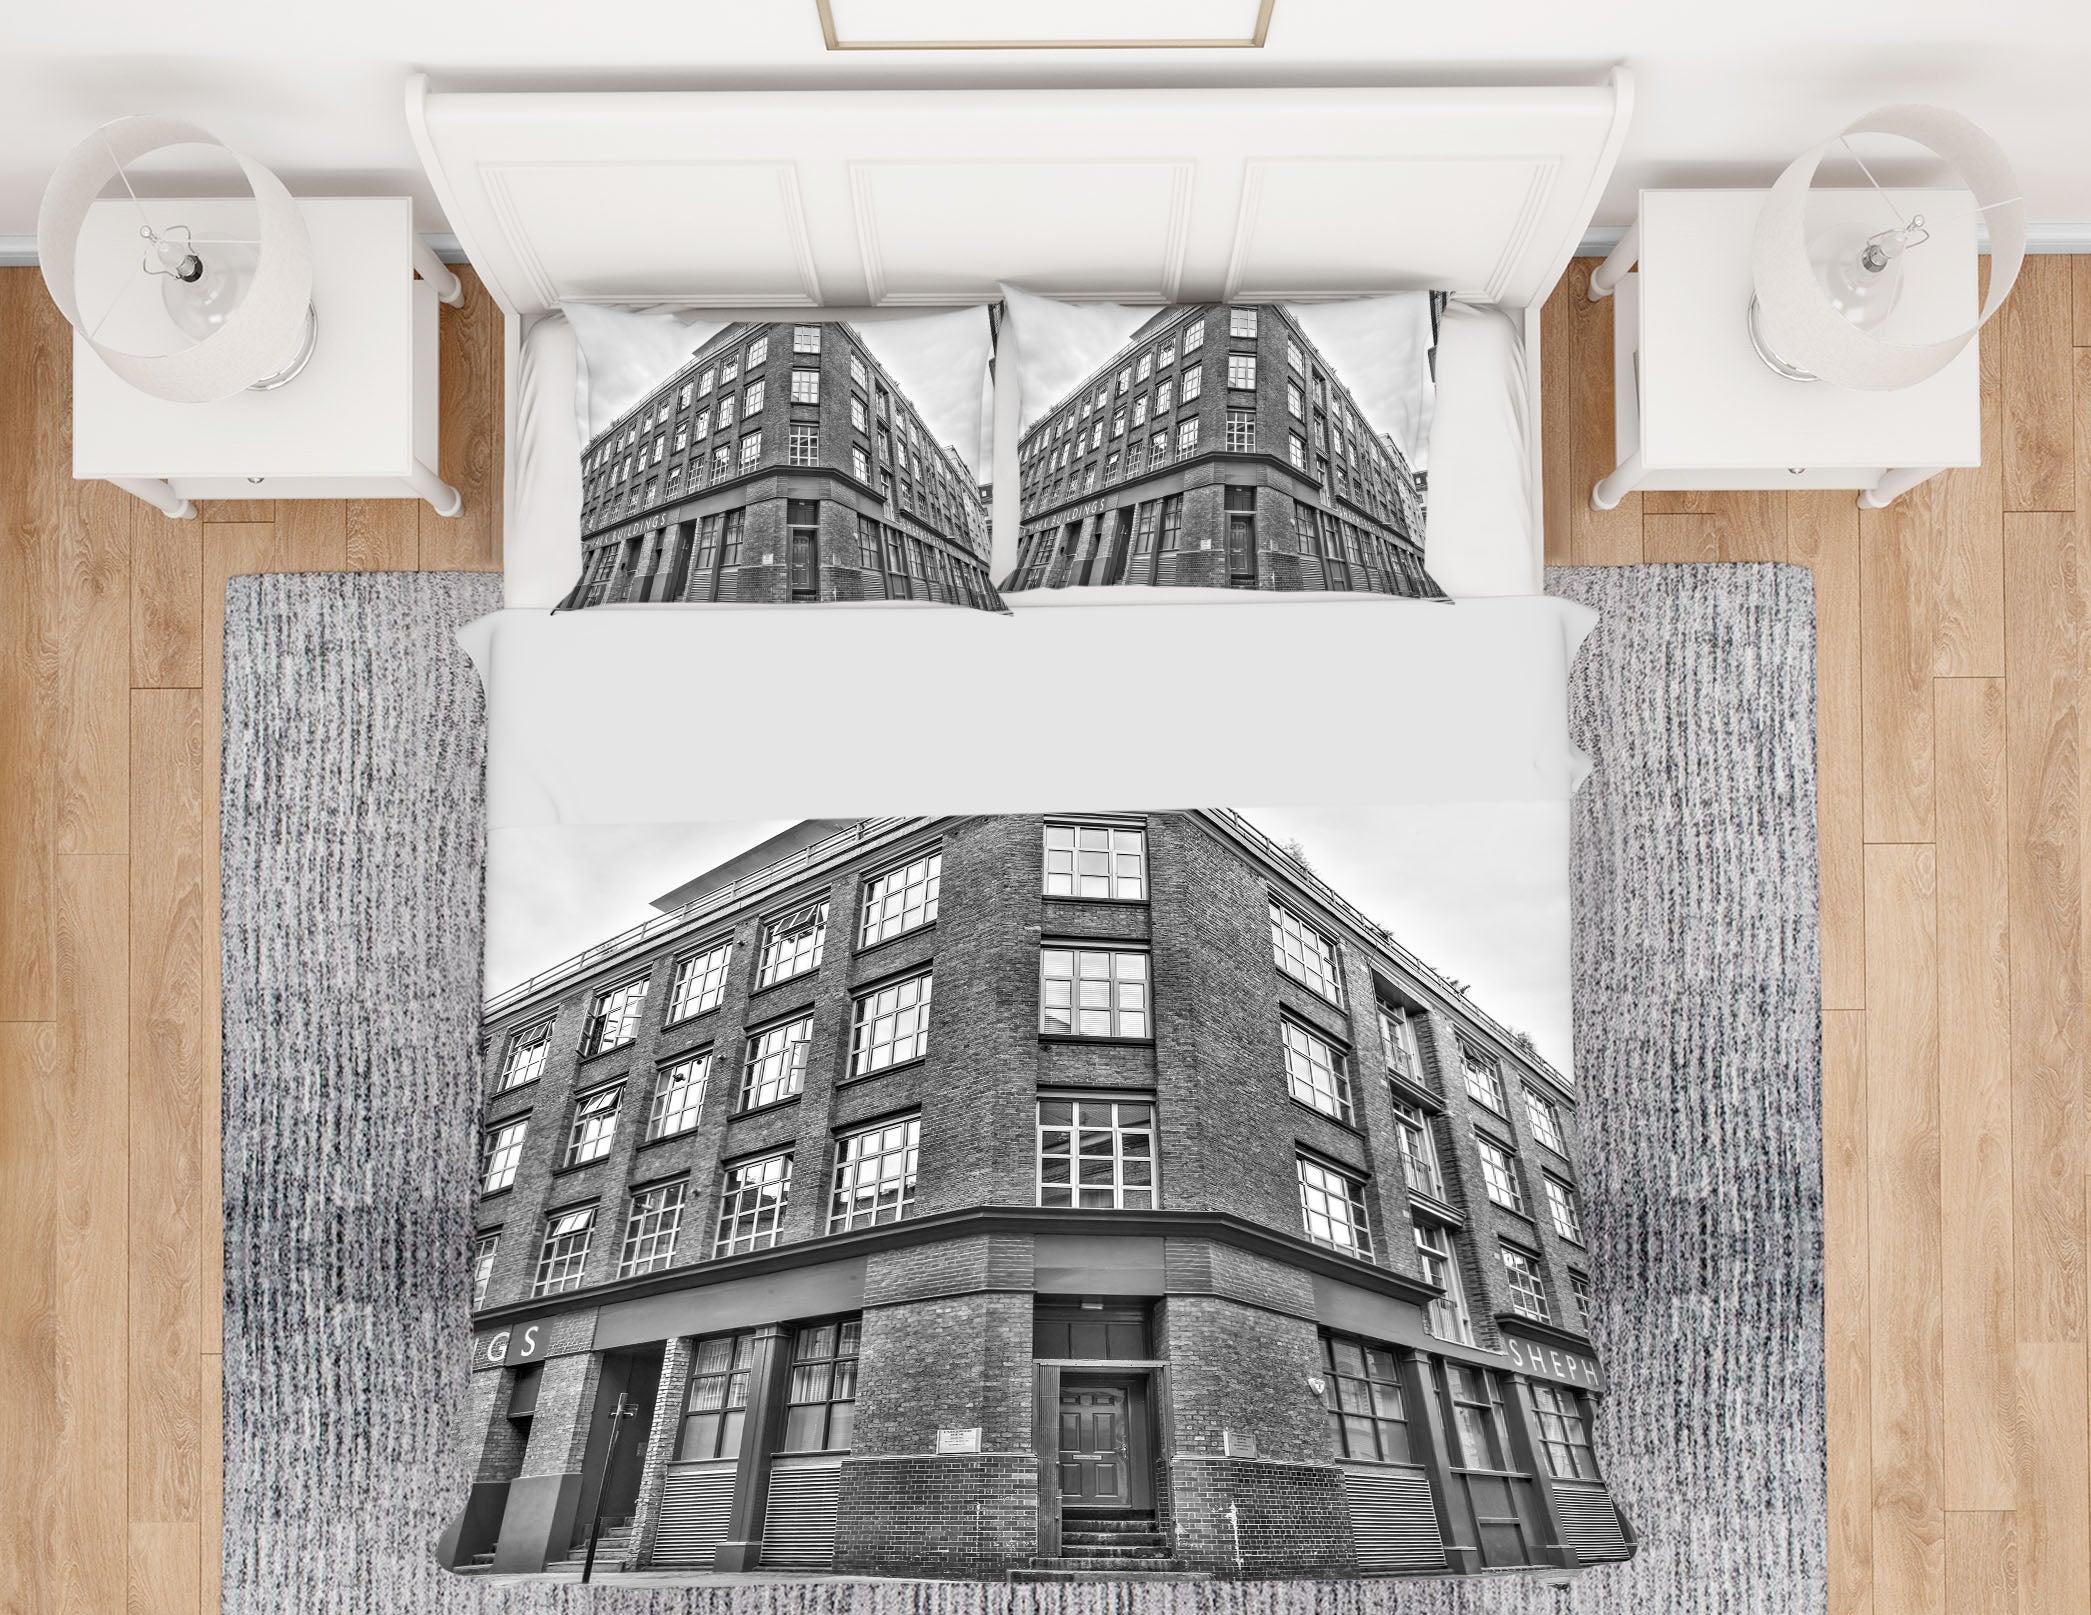 3D Grey Building 8597 Assaf Frank Bedding Bed Pillowcases Quilt